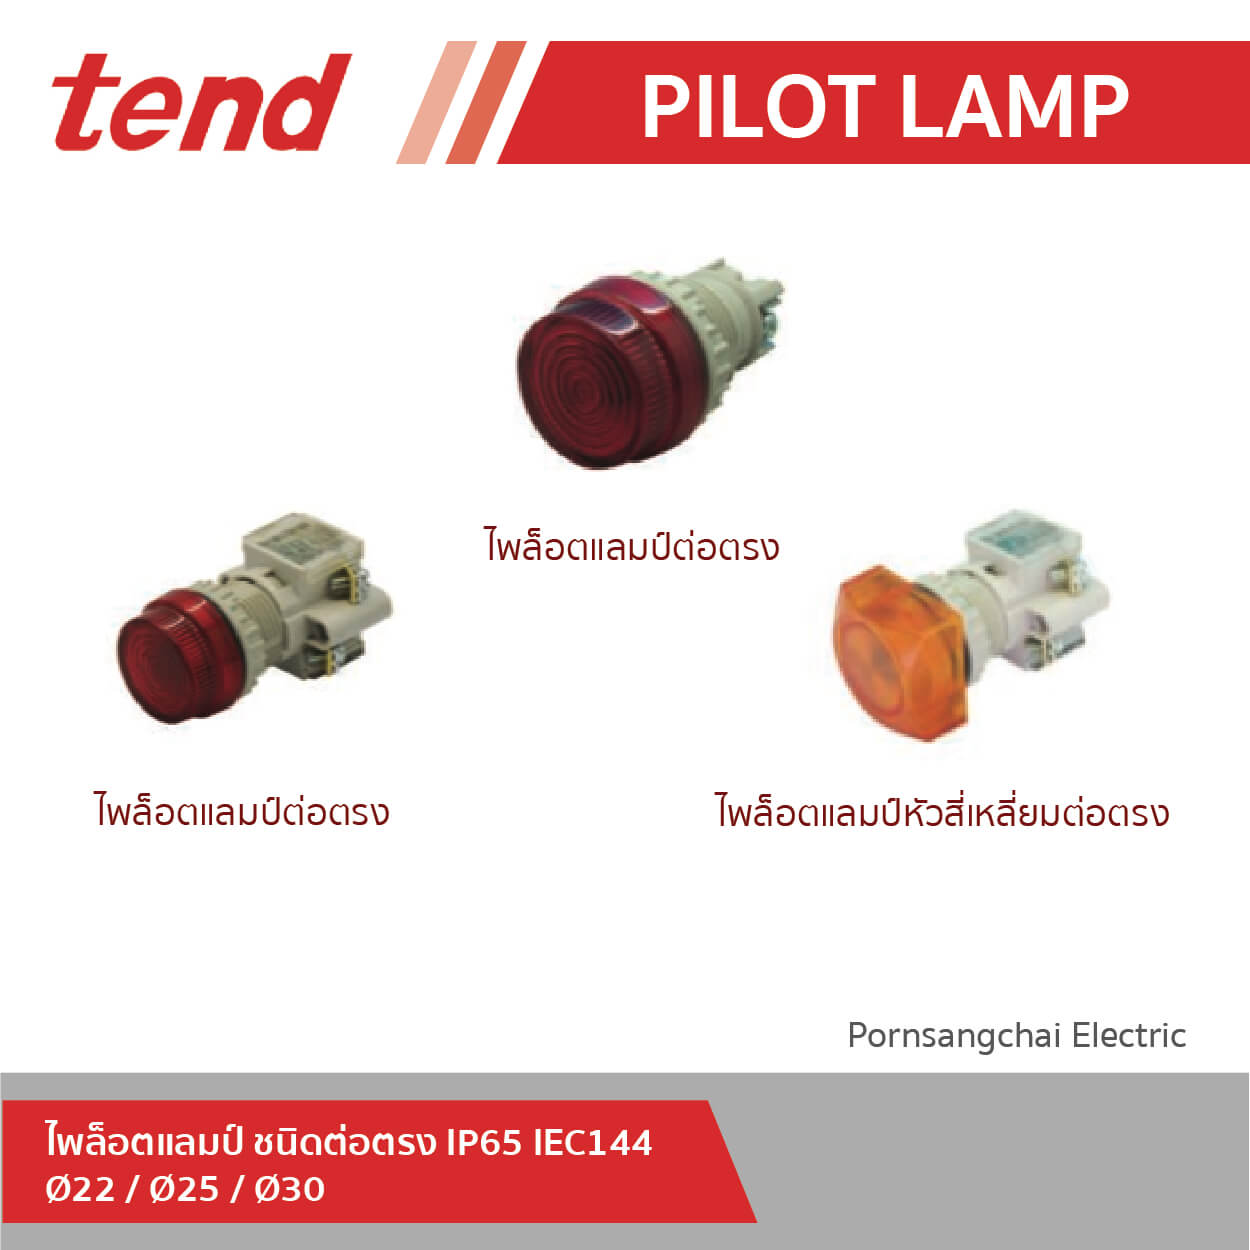 tend Pilot Lamp ไพล็อตแลมป์ ชนิดต่อตรง IP65 IEC144